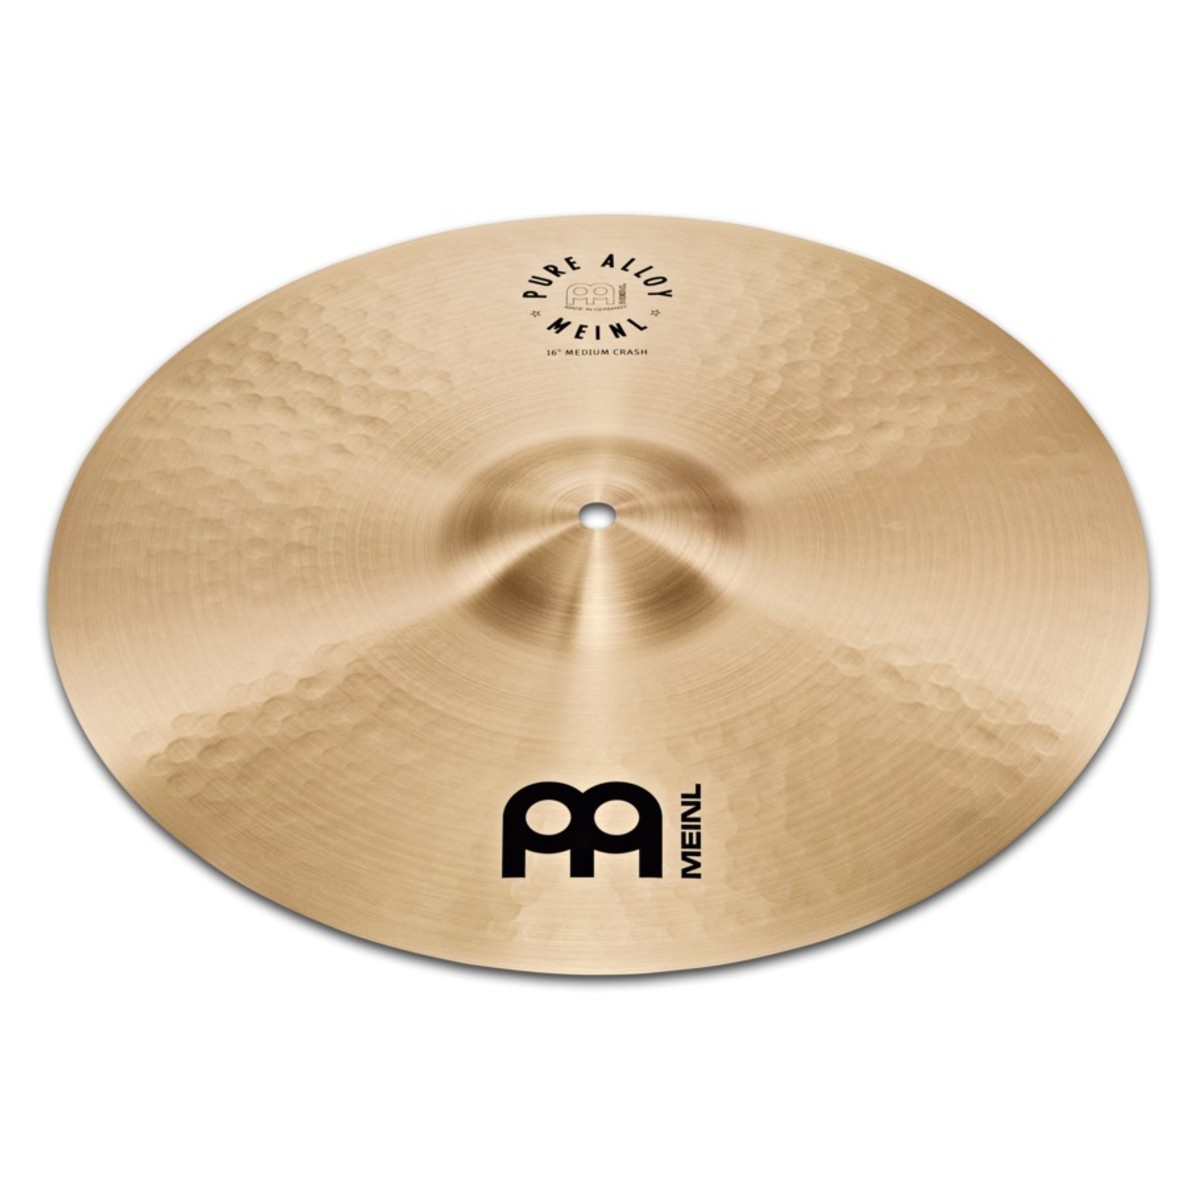 An image of Meinl Pure Alloy 18" Medium Crash Cymbal | PMT Online